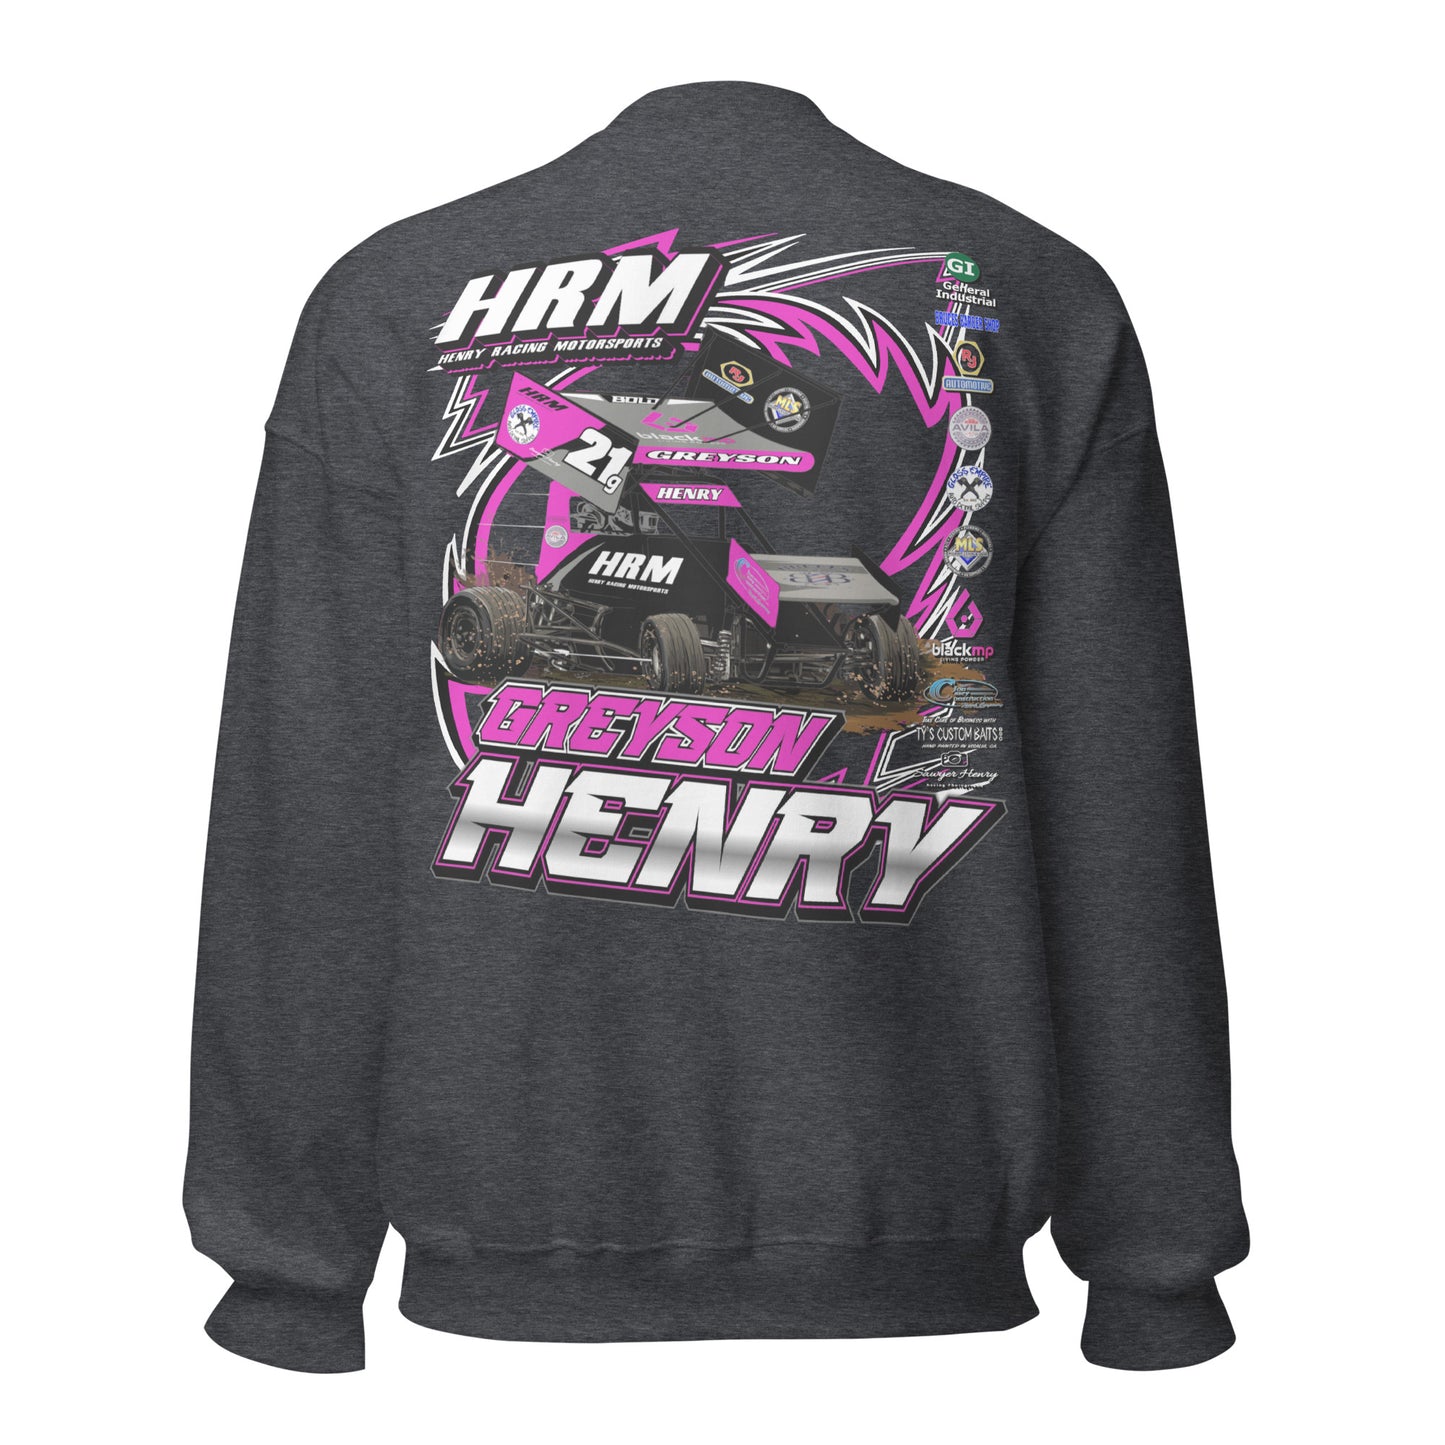 Greyson Henry Adult Crew Sweatshirt